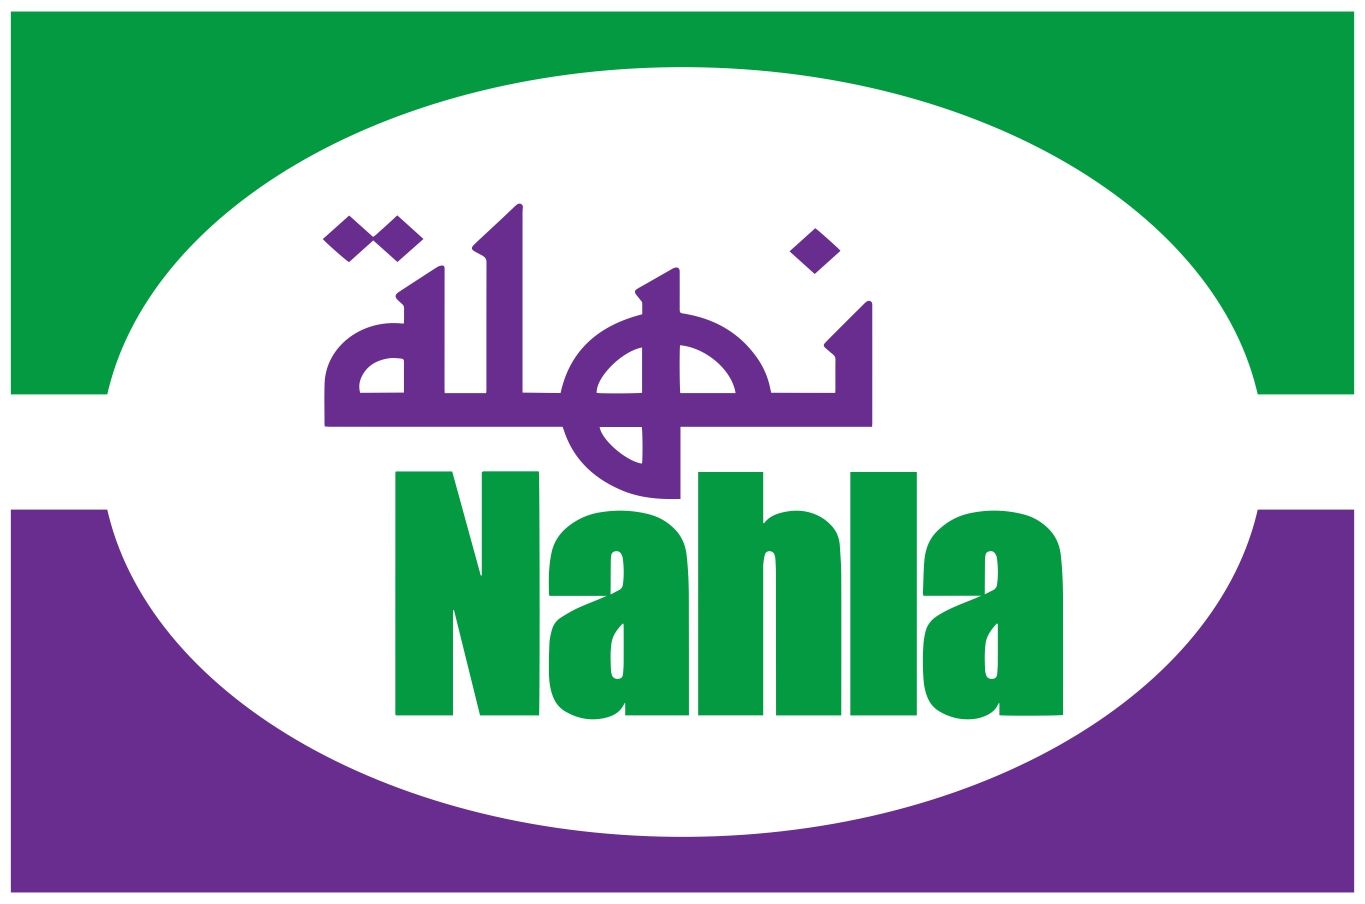 Nahla Medical Supplies